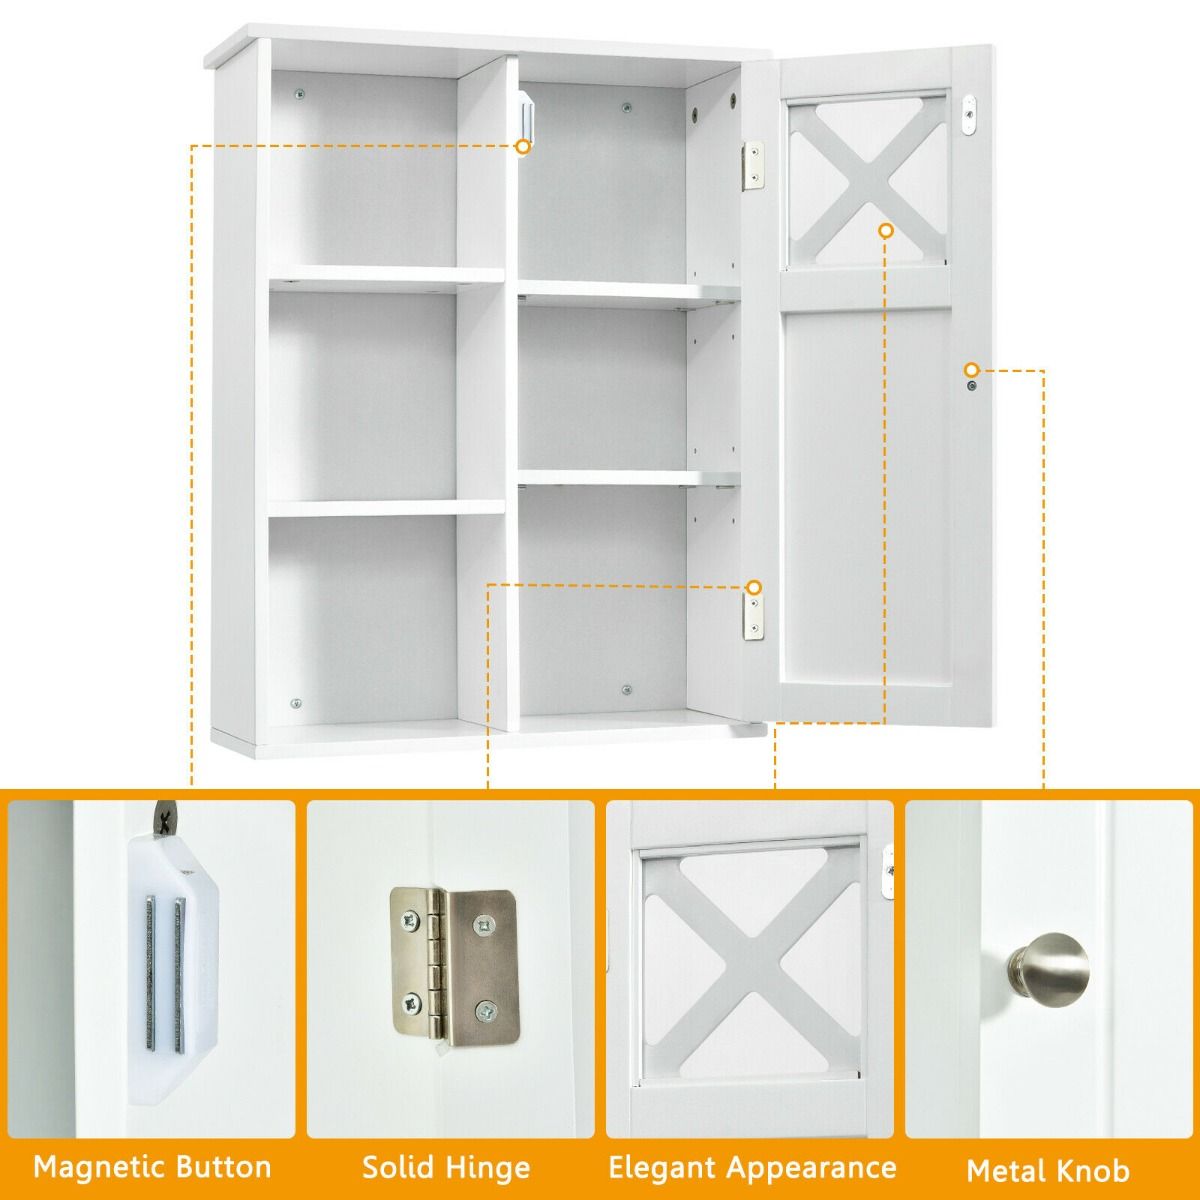 Wall-mounted Bathroom Medicine Cabinet with Adjustable Shelves